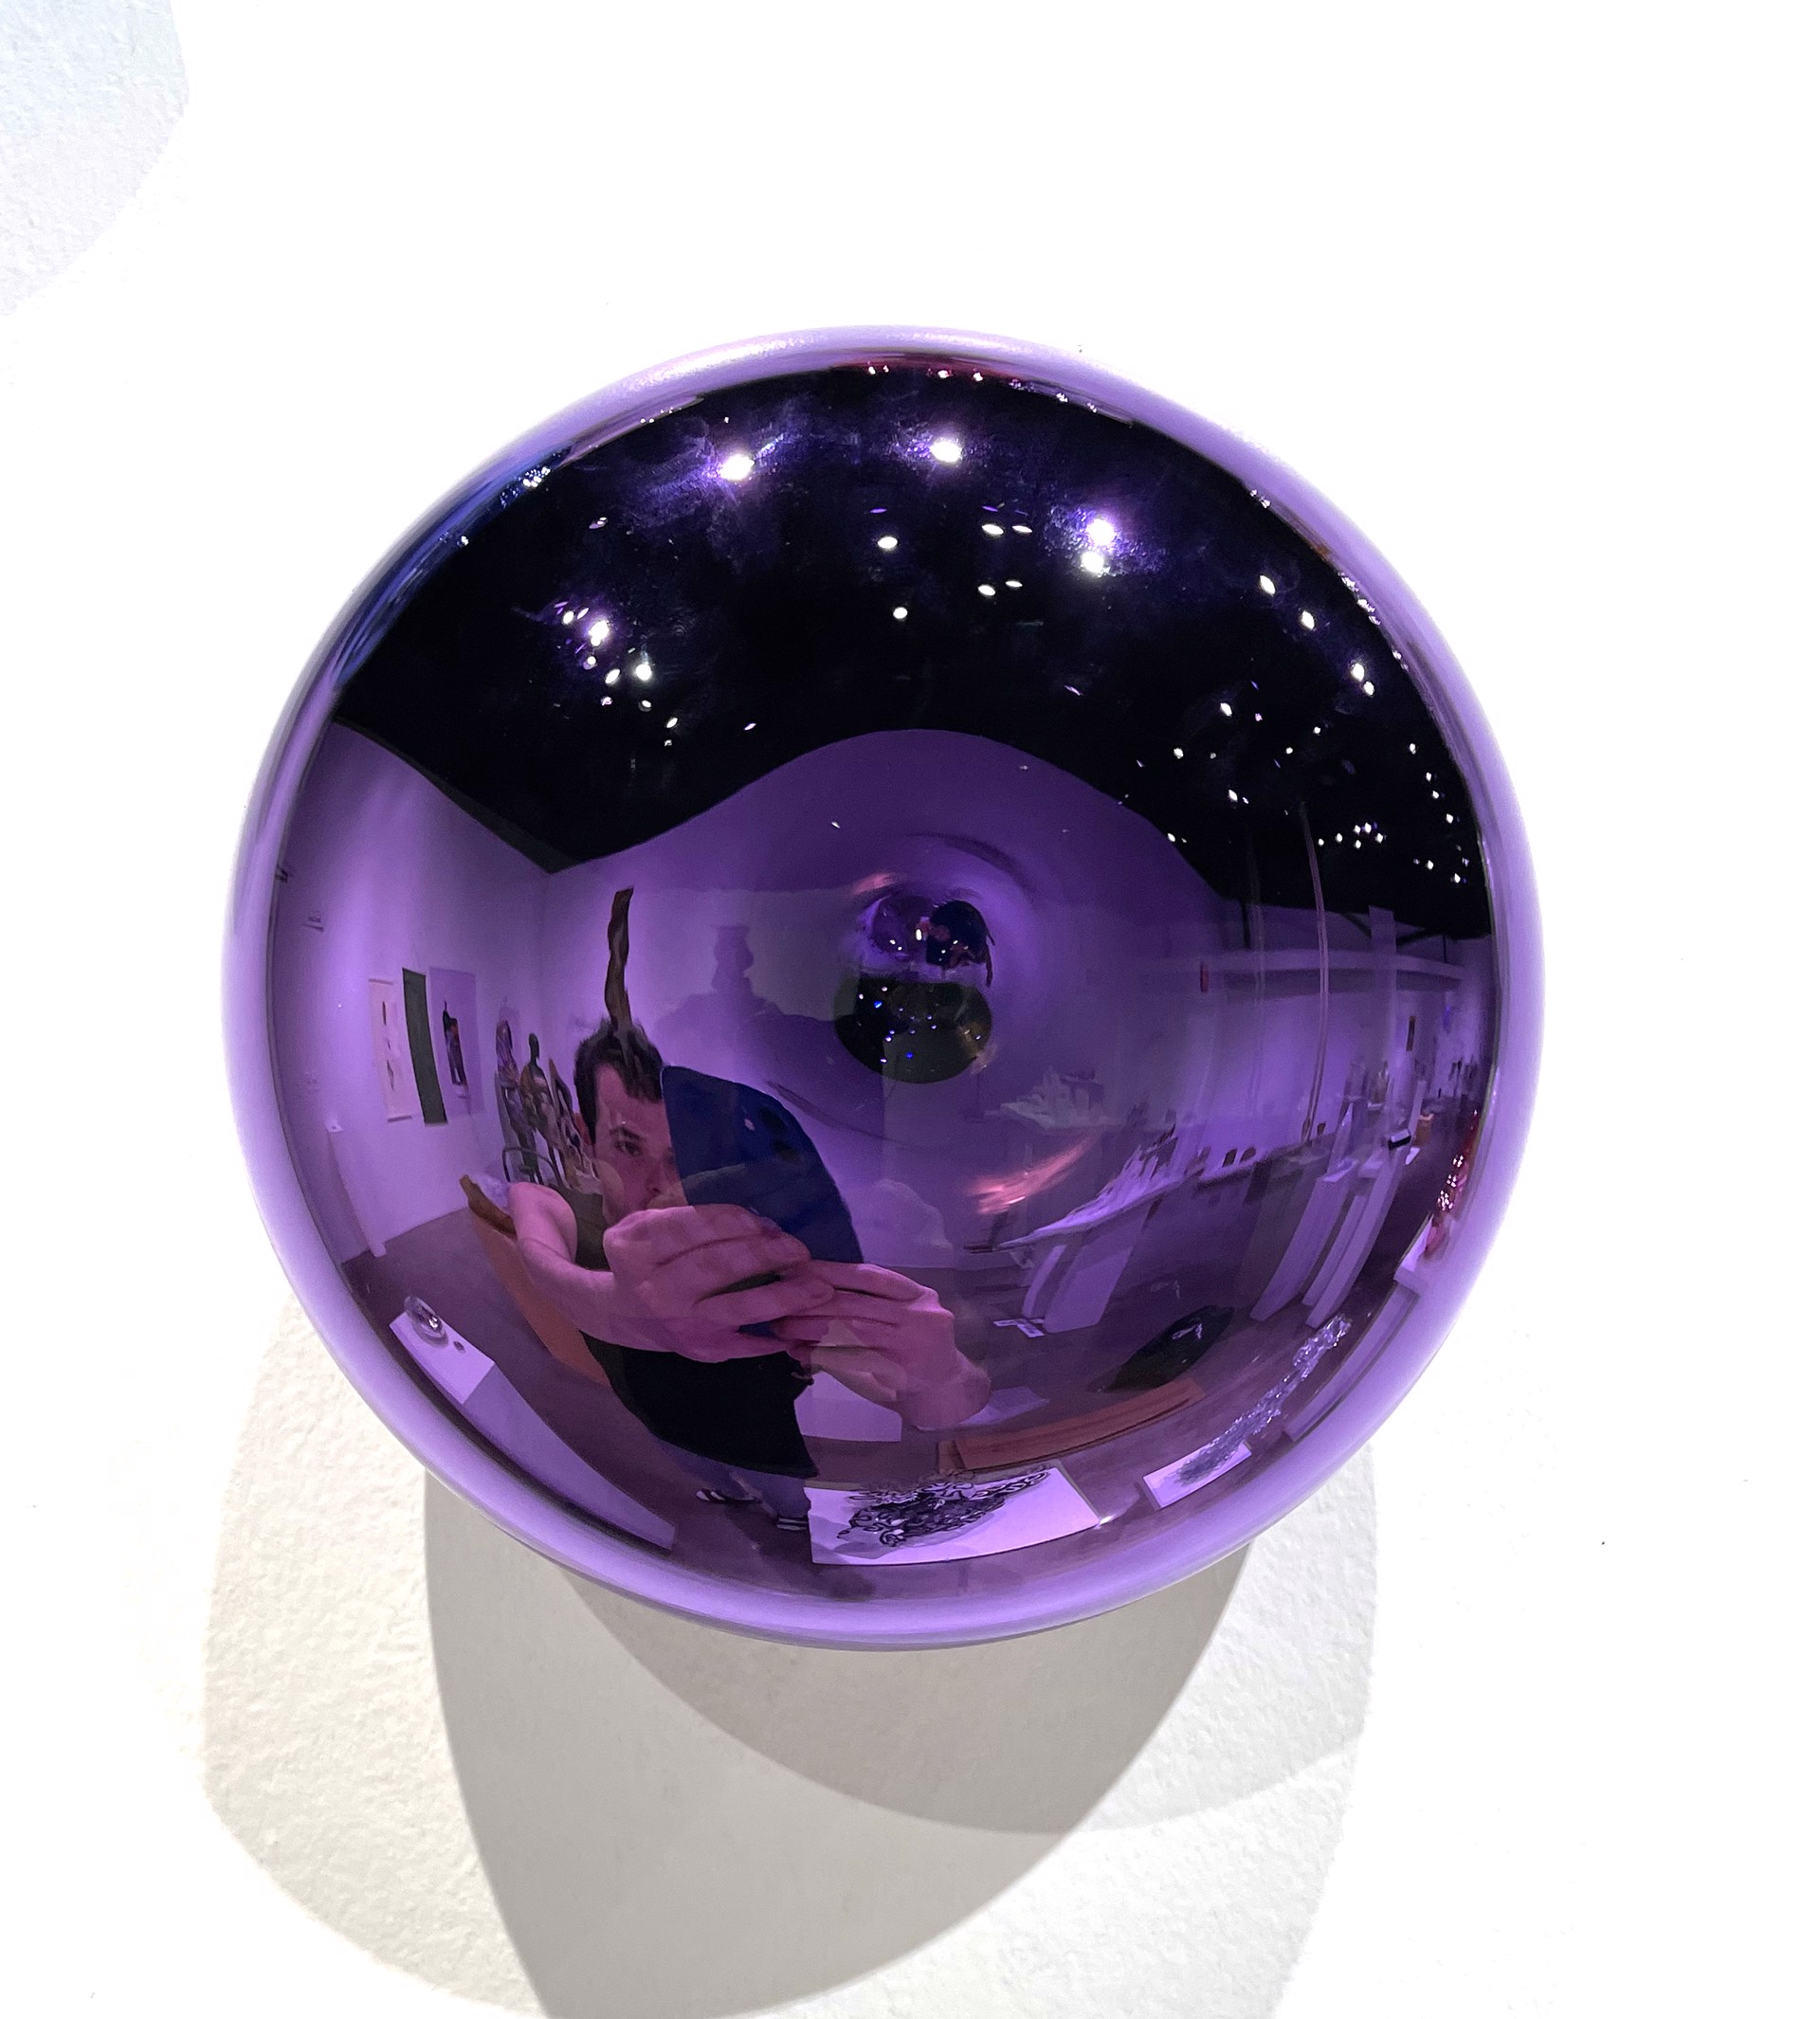 123- Skittle 91 (purple) by Simon Waranch